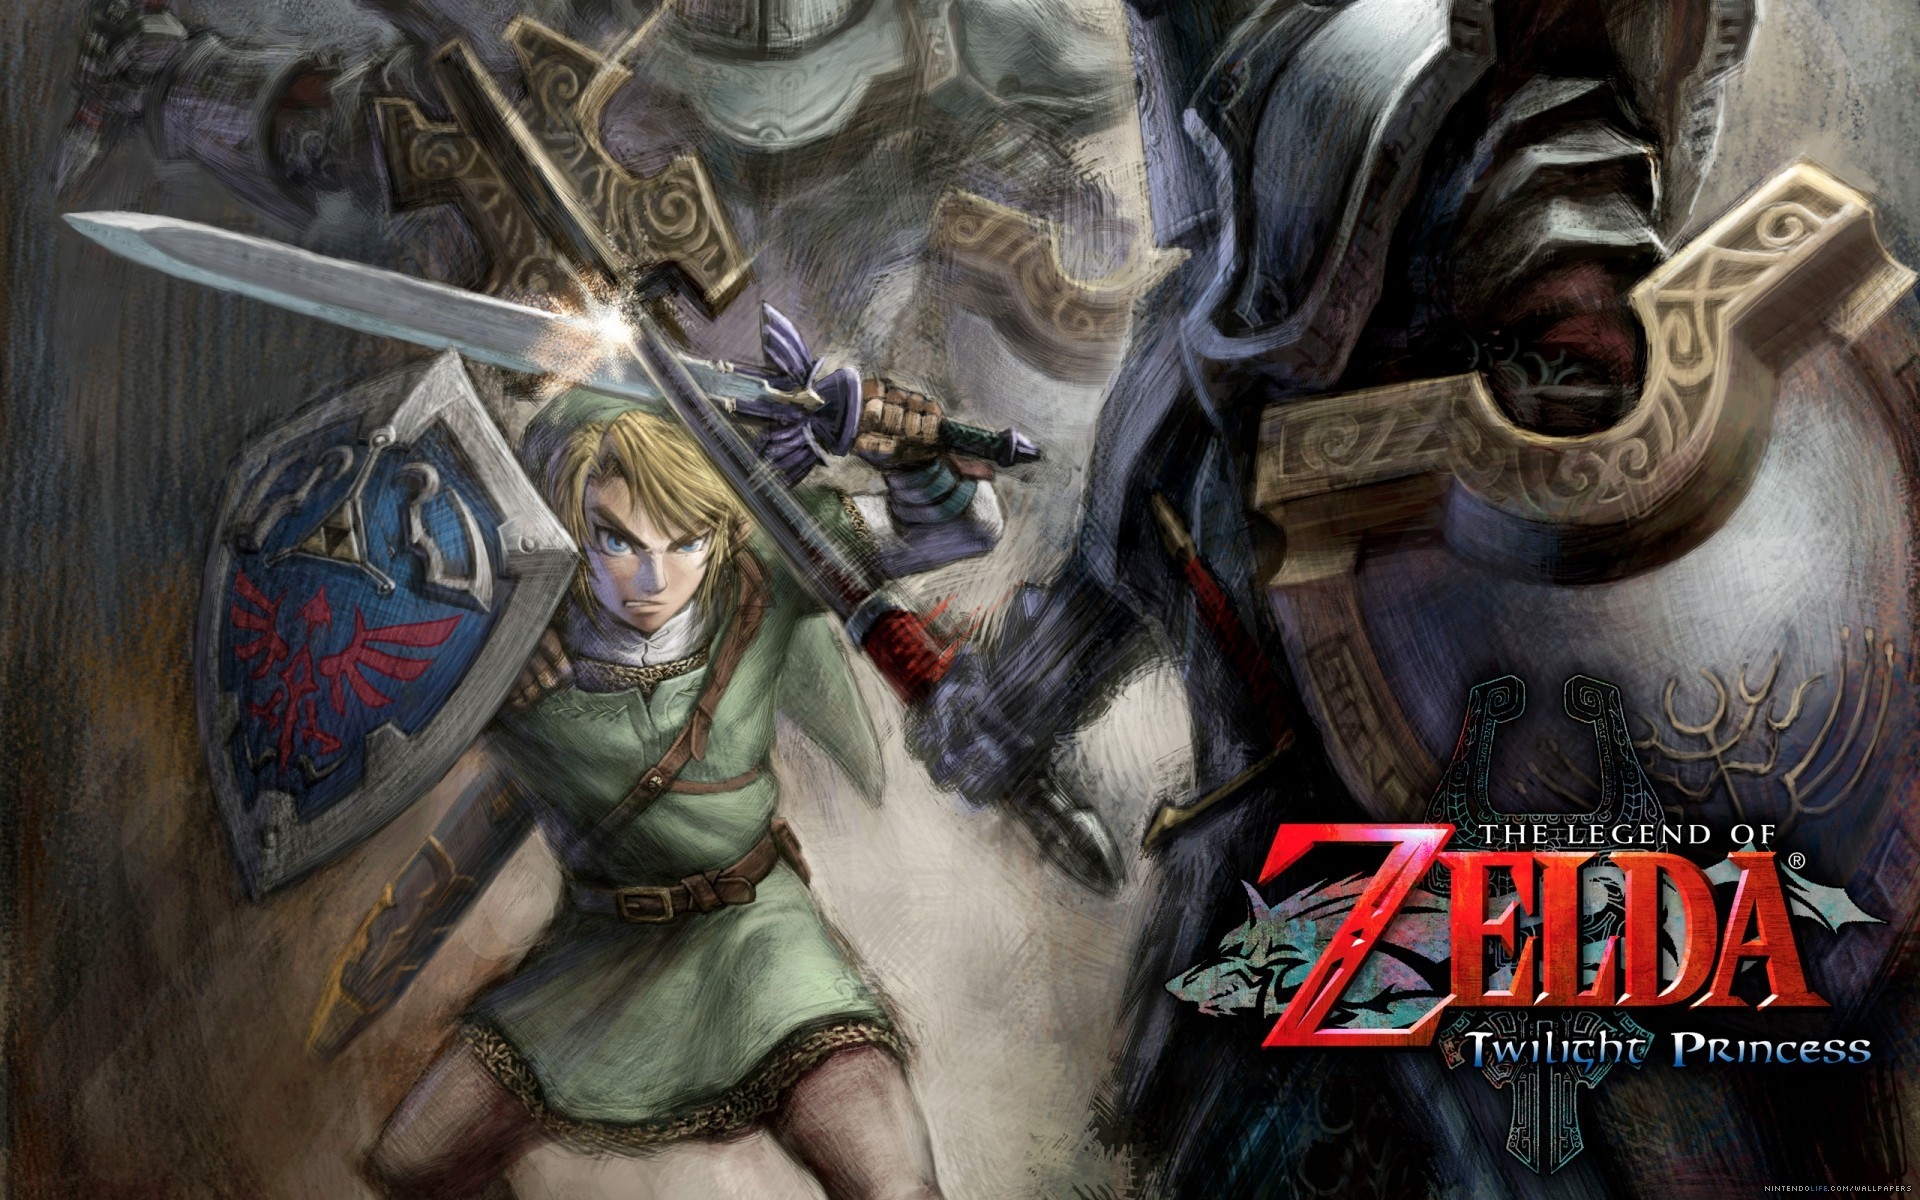 The Legend of Zelda Twilight Princess for 1920 x 1200 widescreen resolution